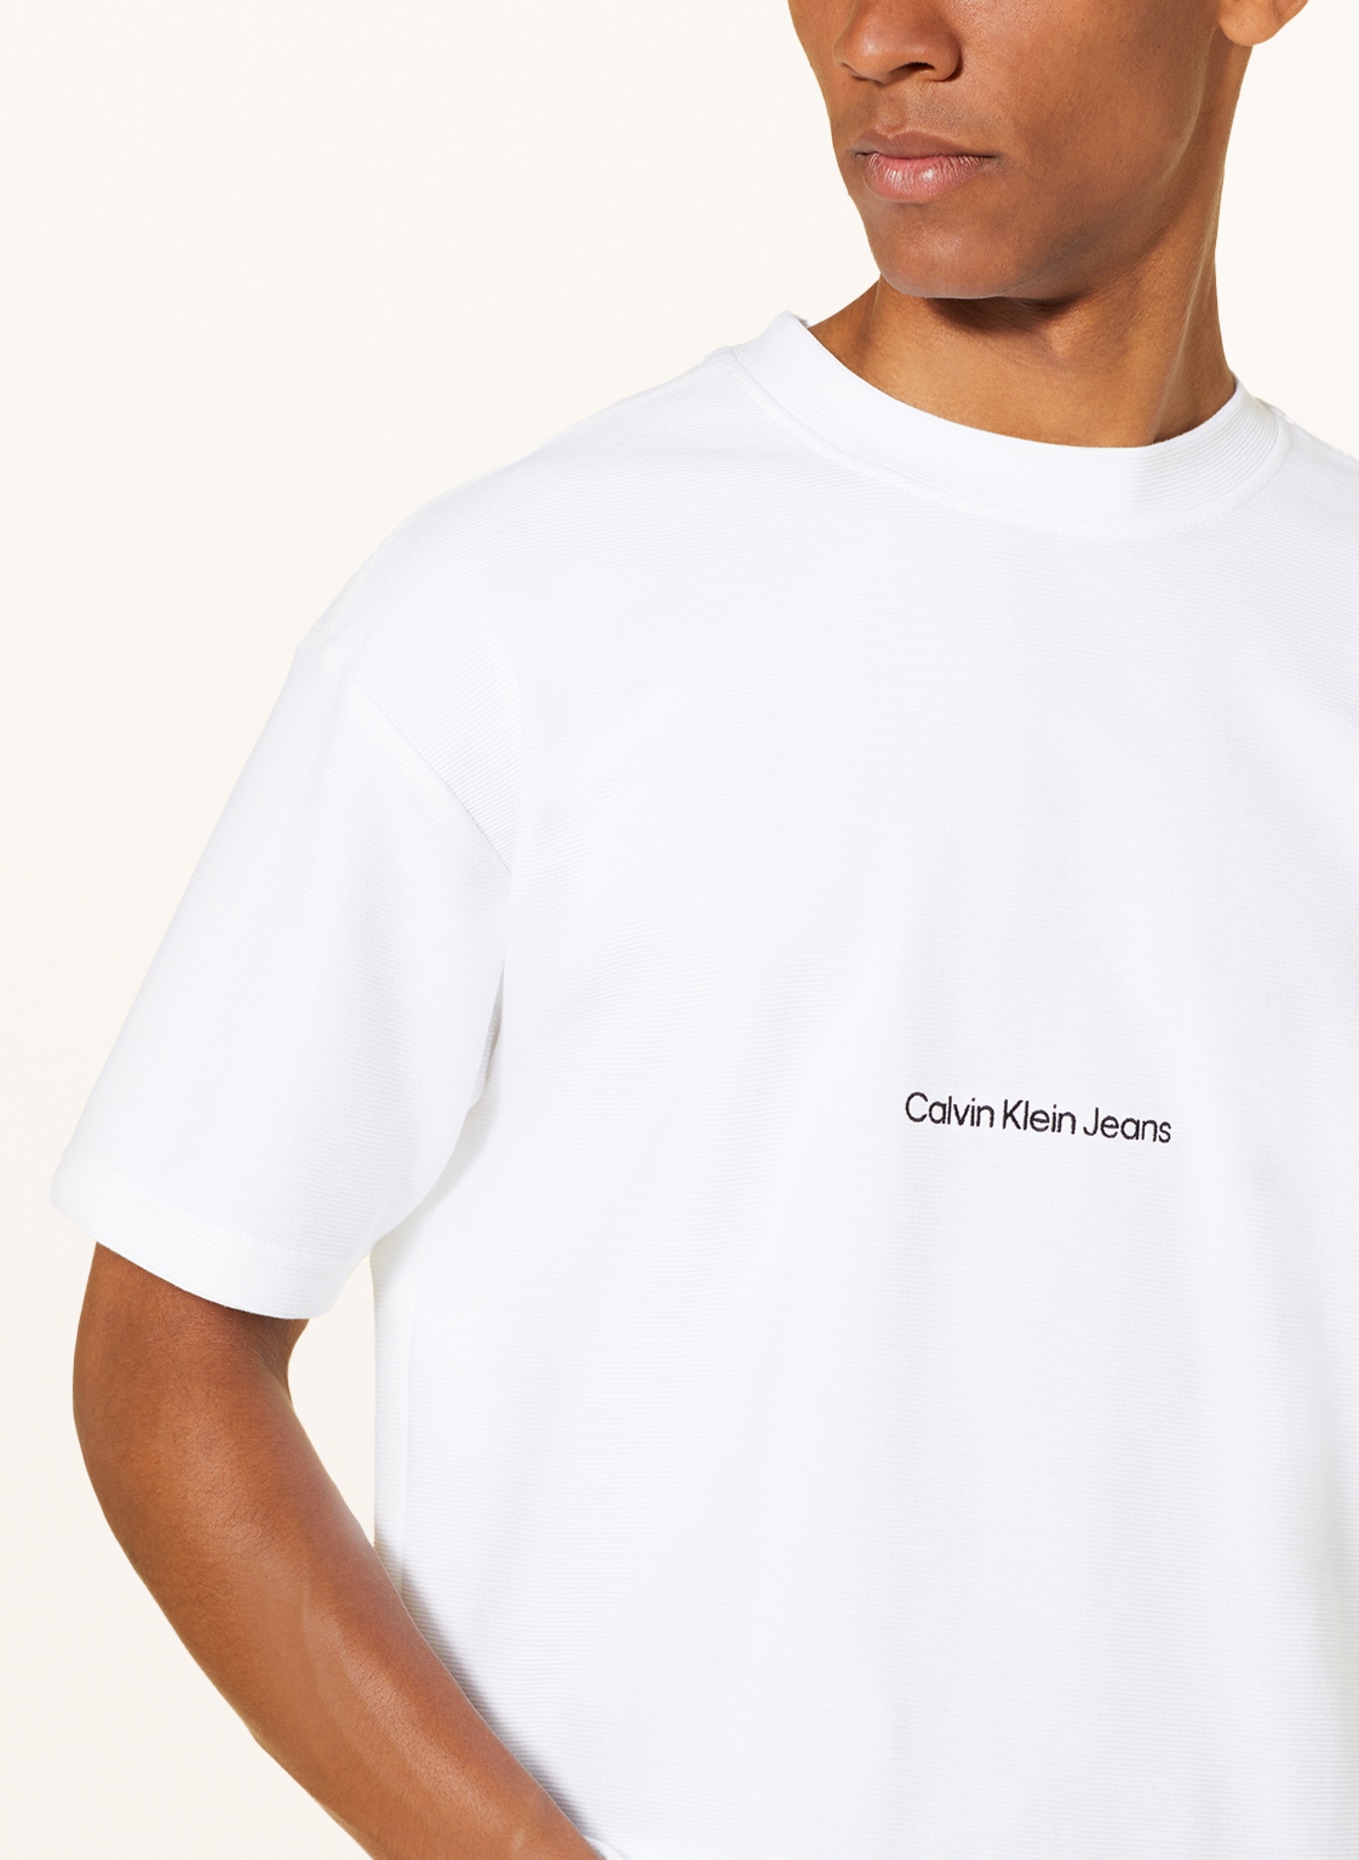 Jeans Klein Calvin weiss T-Shirt in